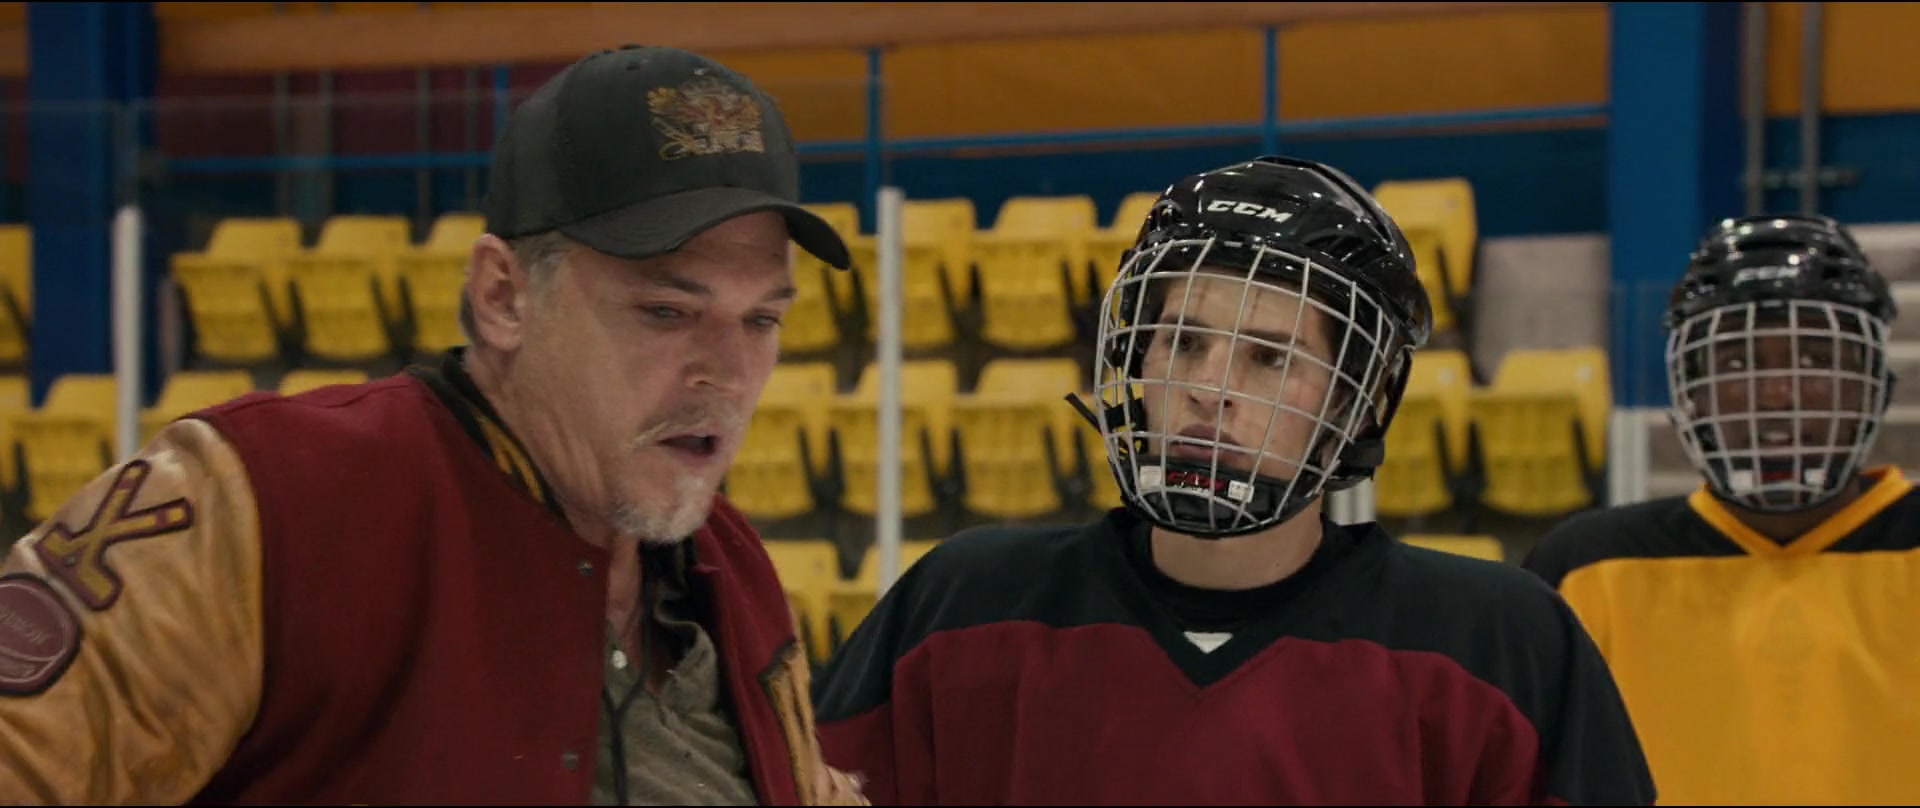 CCM Ice Hockey Helmets in Status Update (2018) Movie1920 x 808